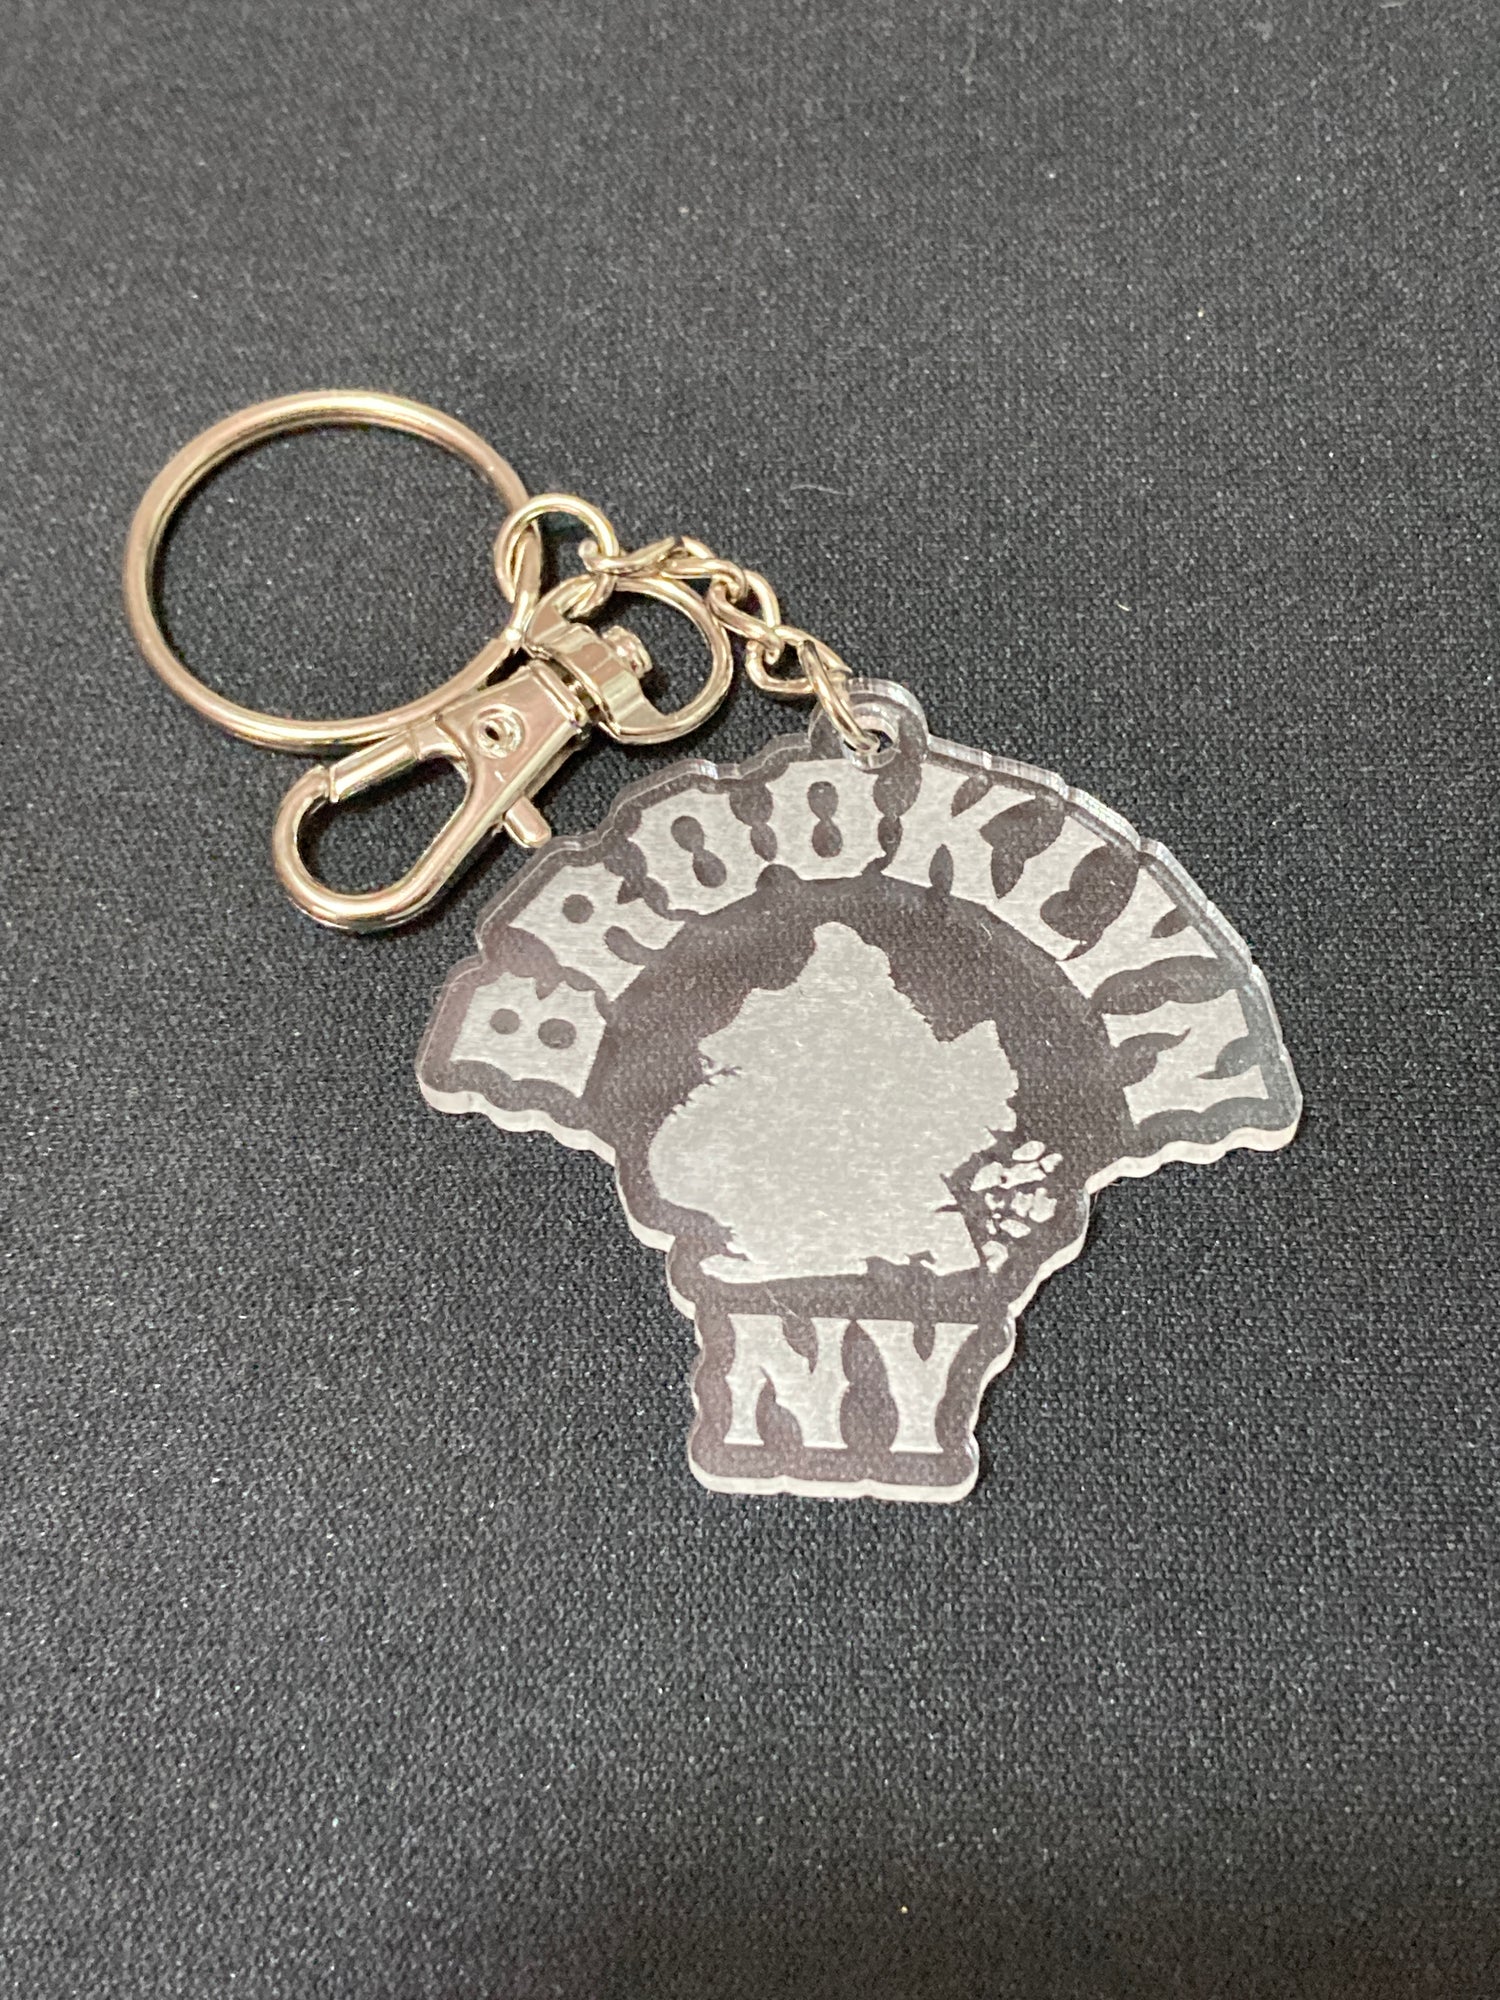 New York Keychain